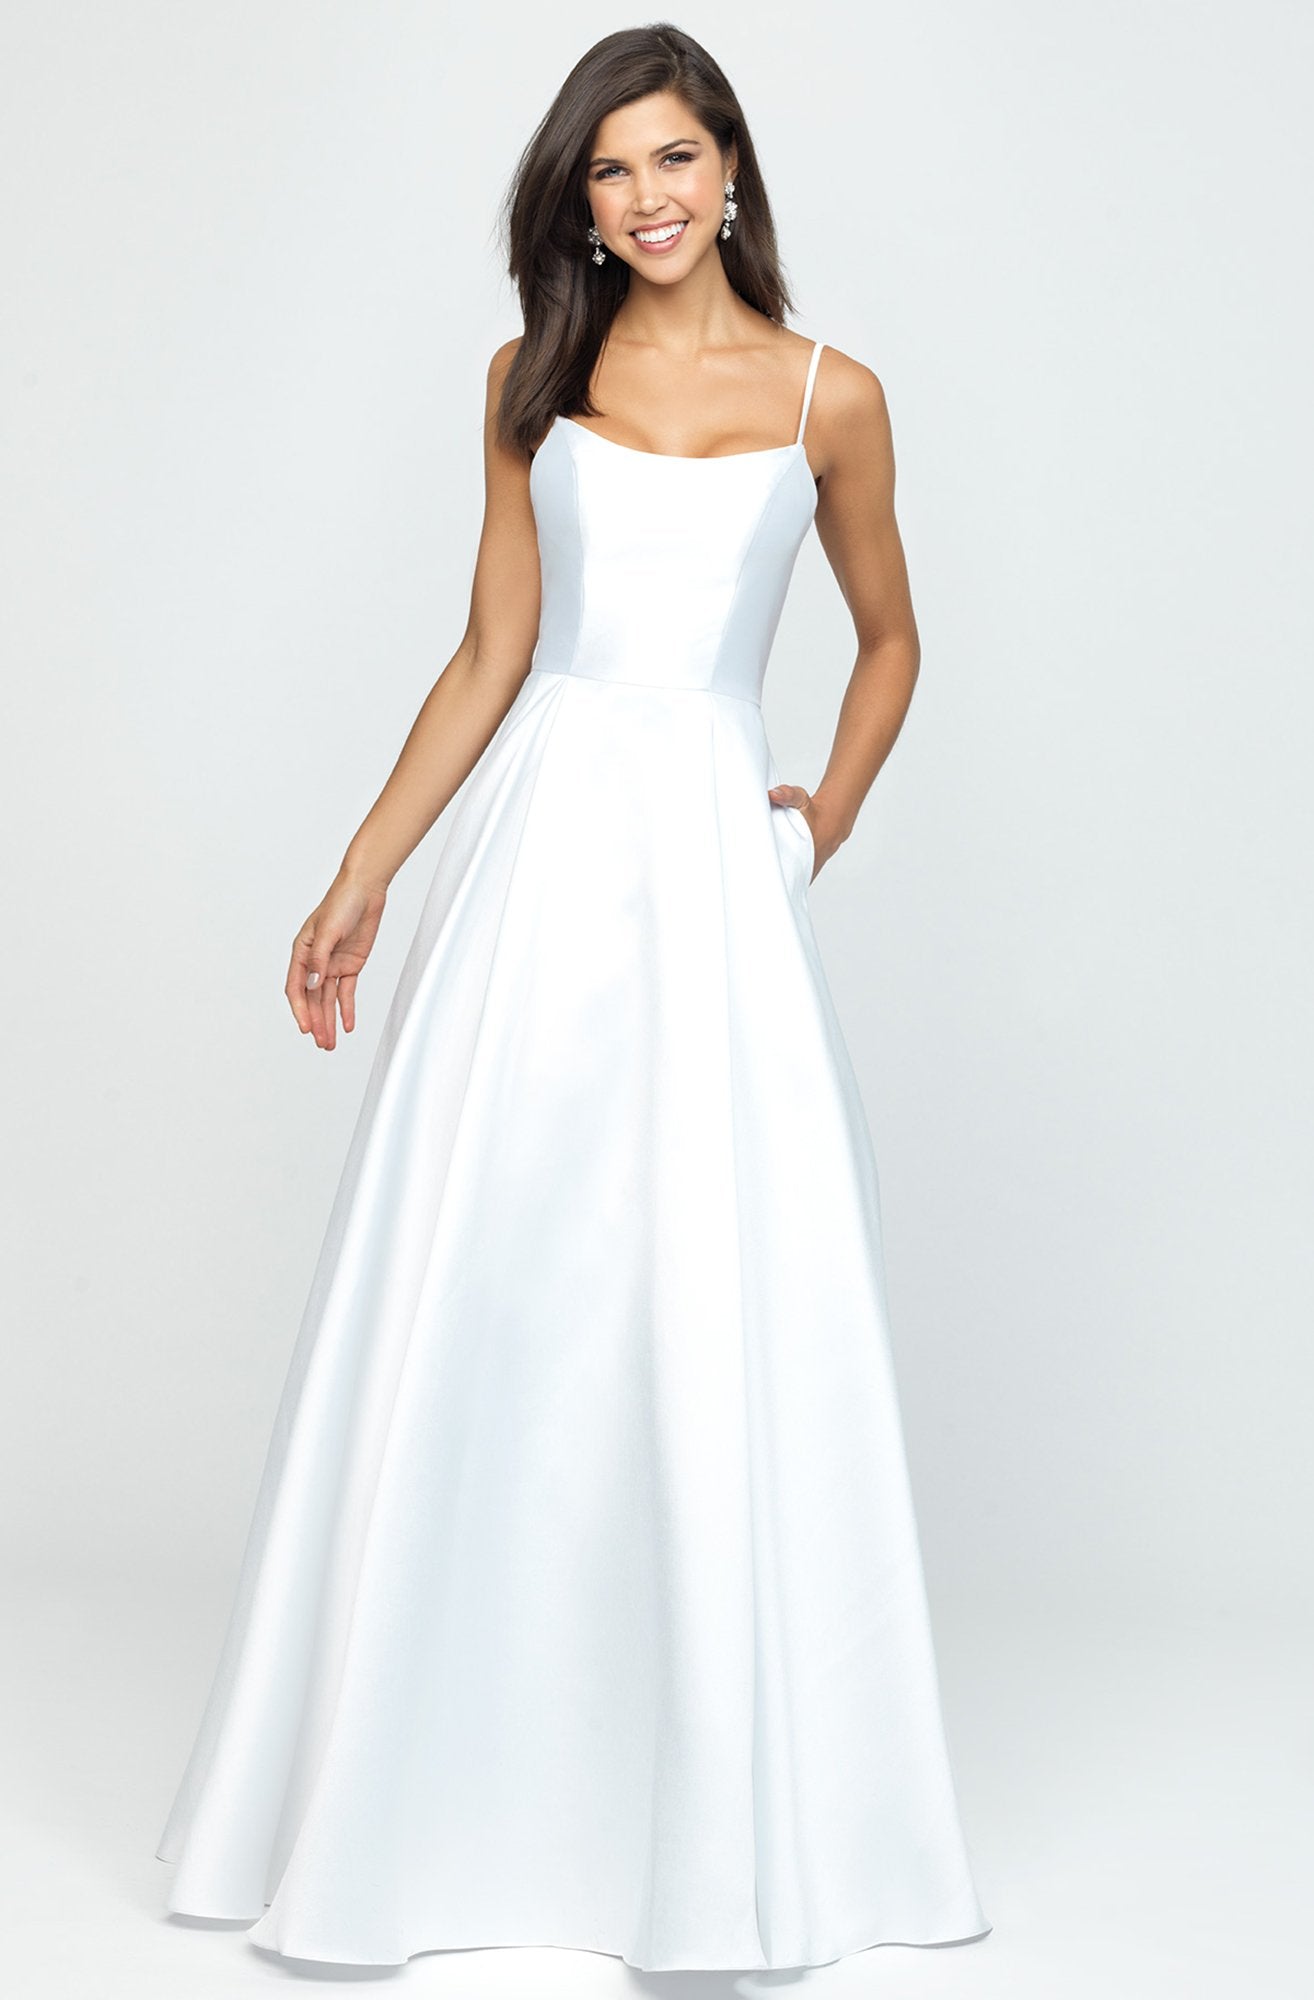 Madison James - Sleeveless Square Neck Mikado Prom Ballgown 19-107 - 1 pc White In Size 10 Available In White